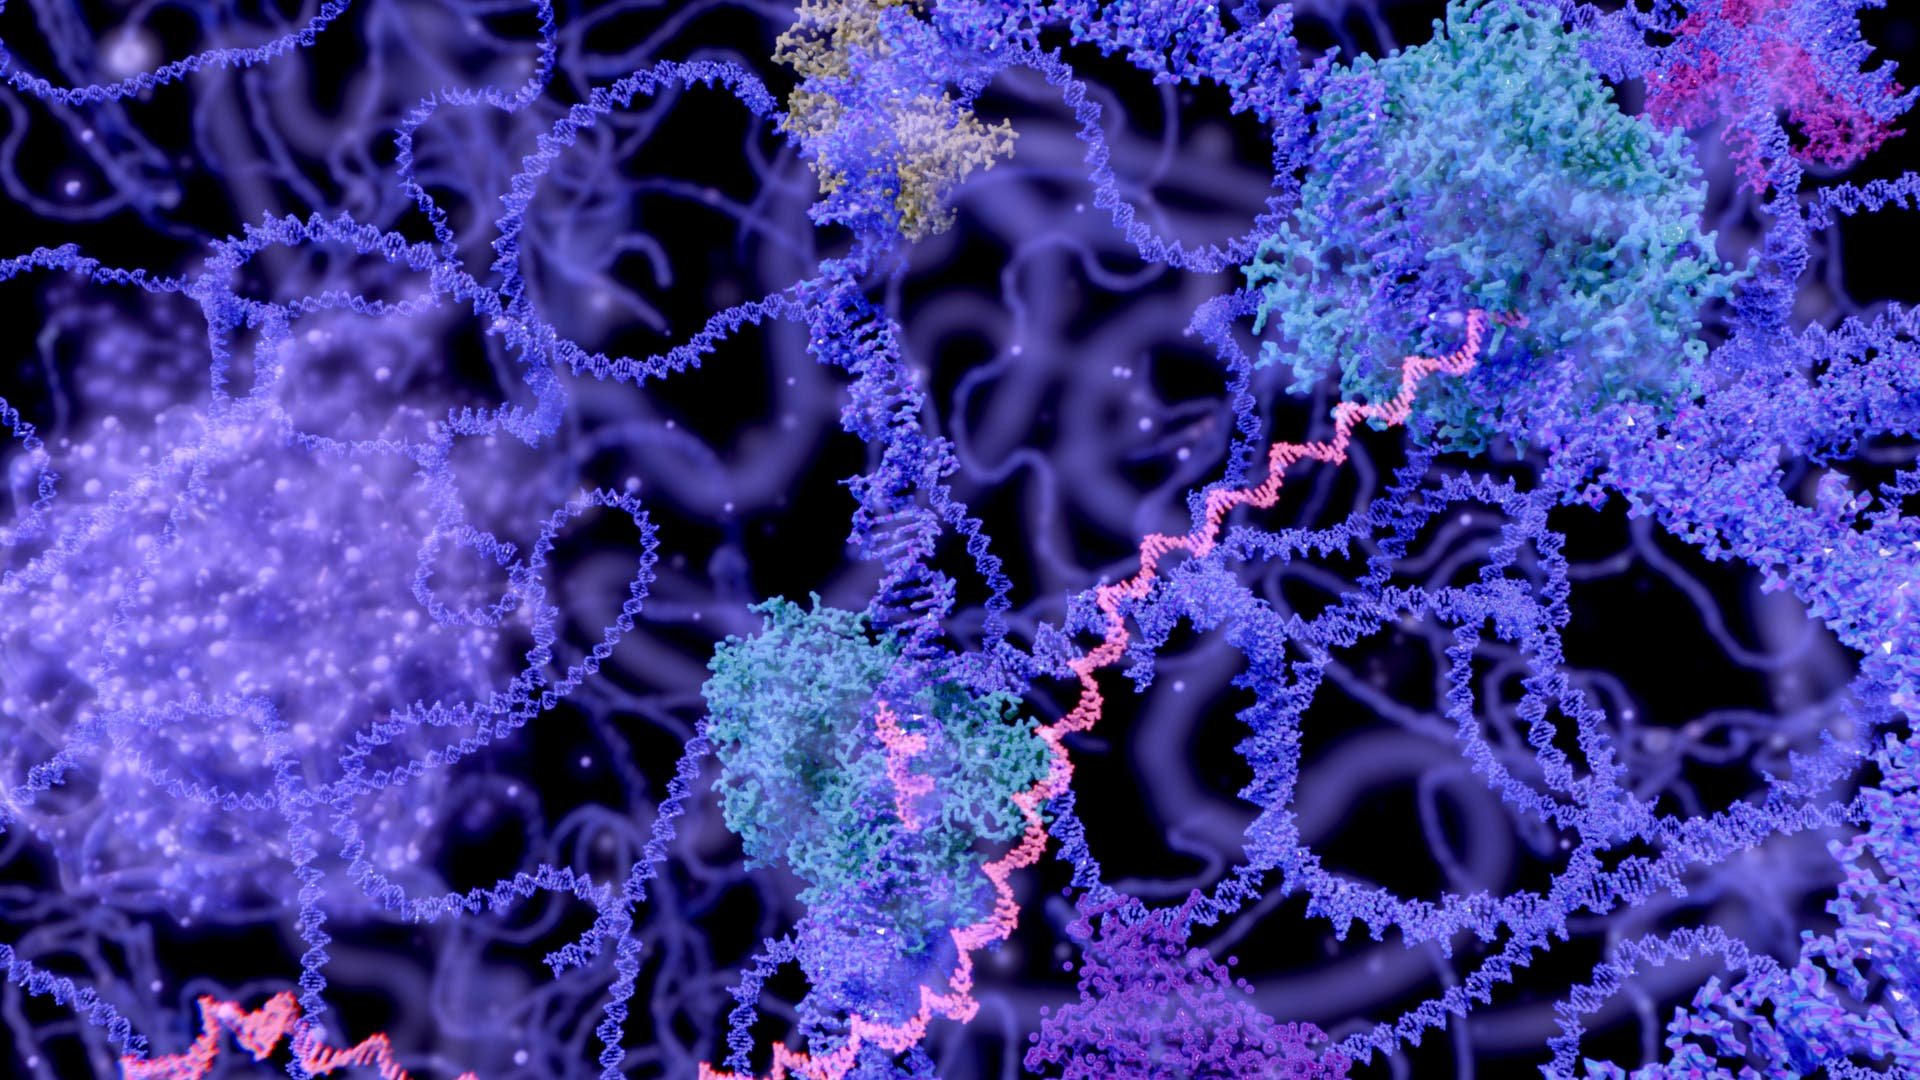 Gentechnik: Anti-CRISPR soll CRISPR besser machen